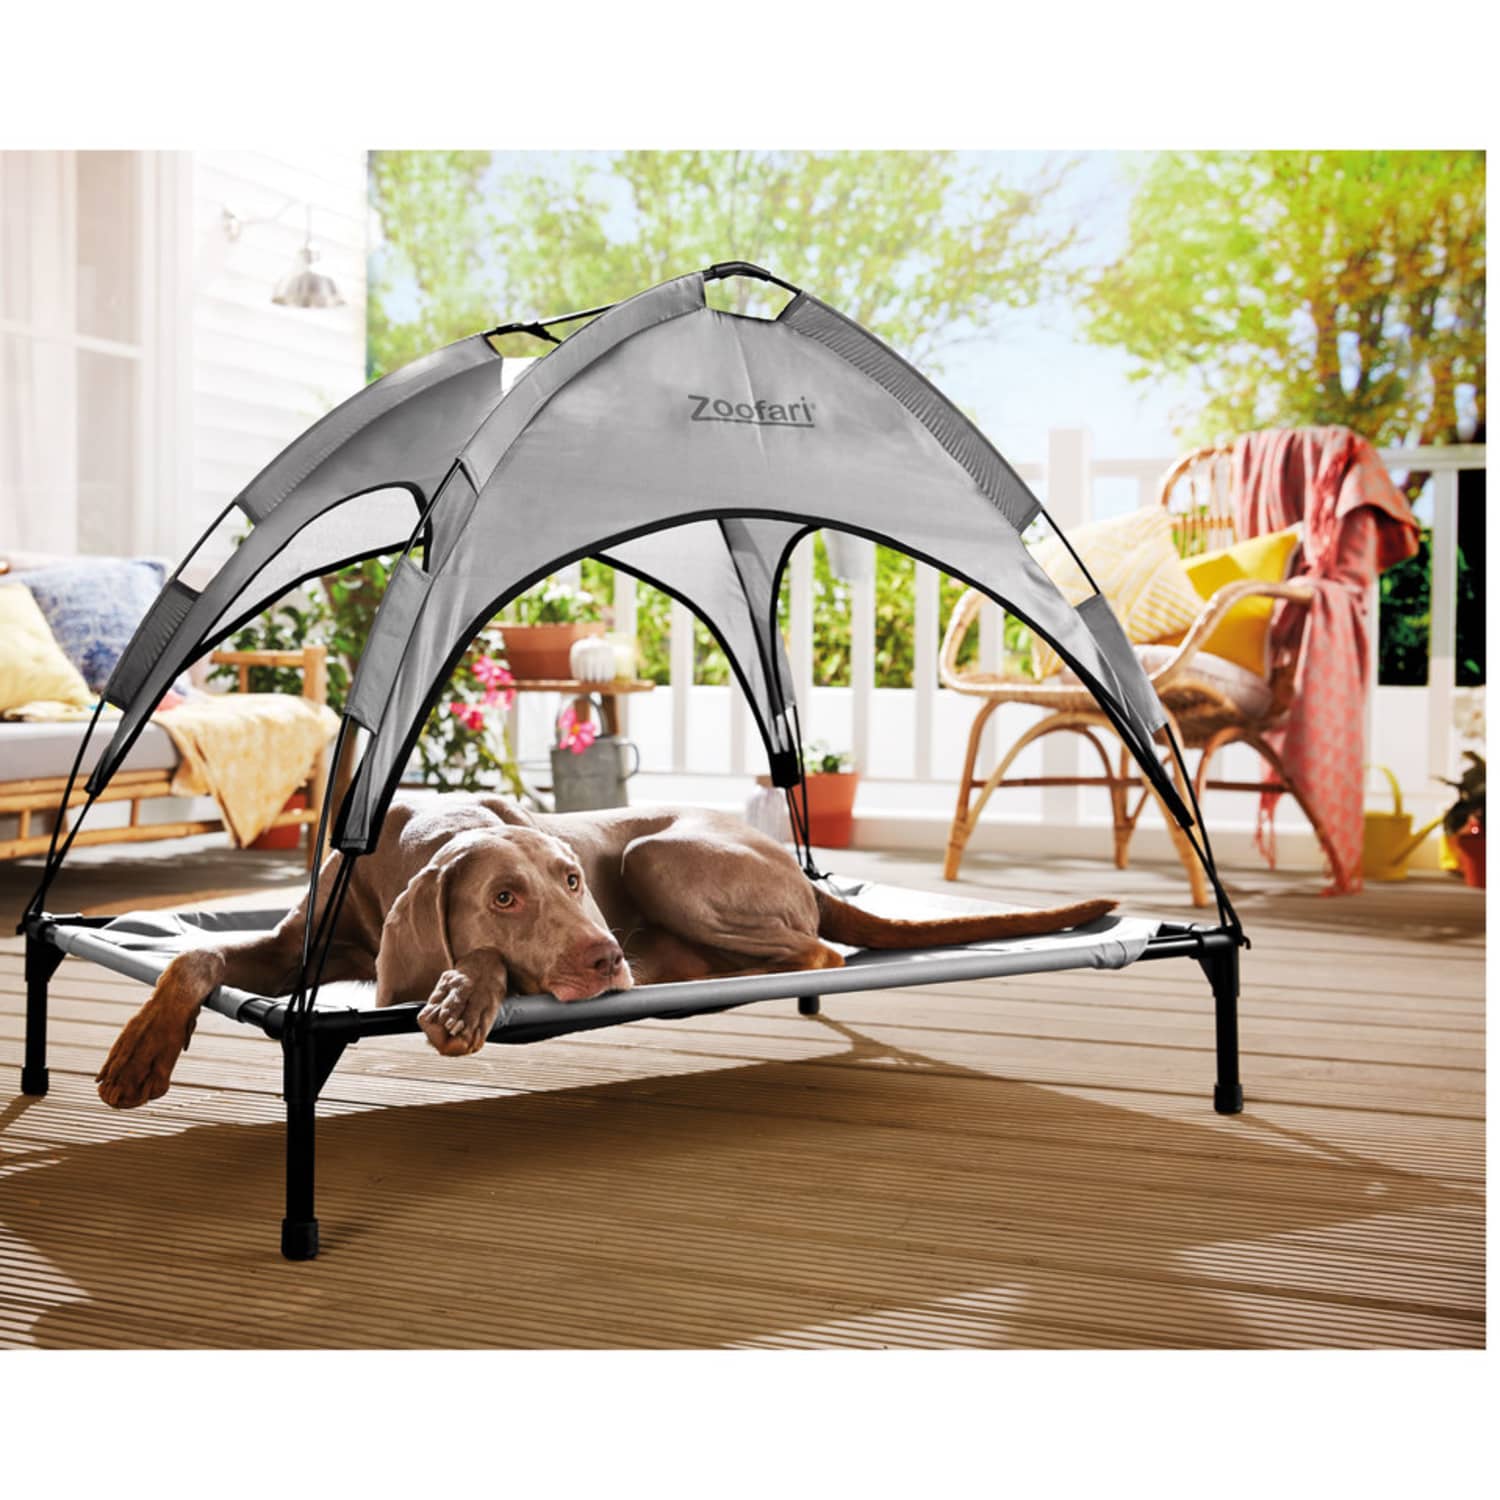 zoofari dog bed with sunshade